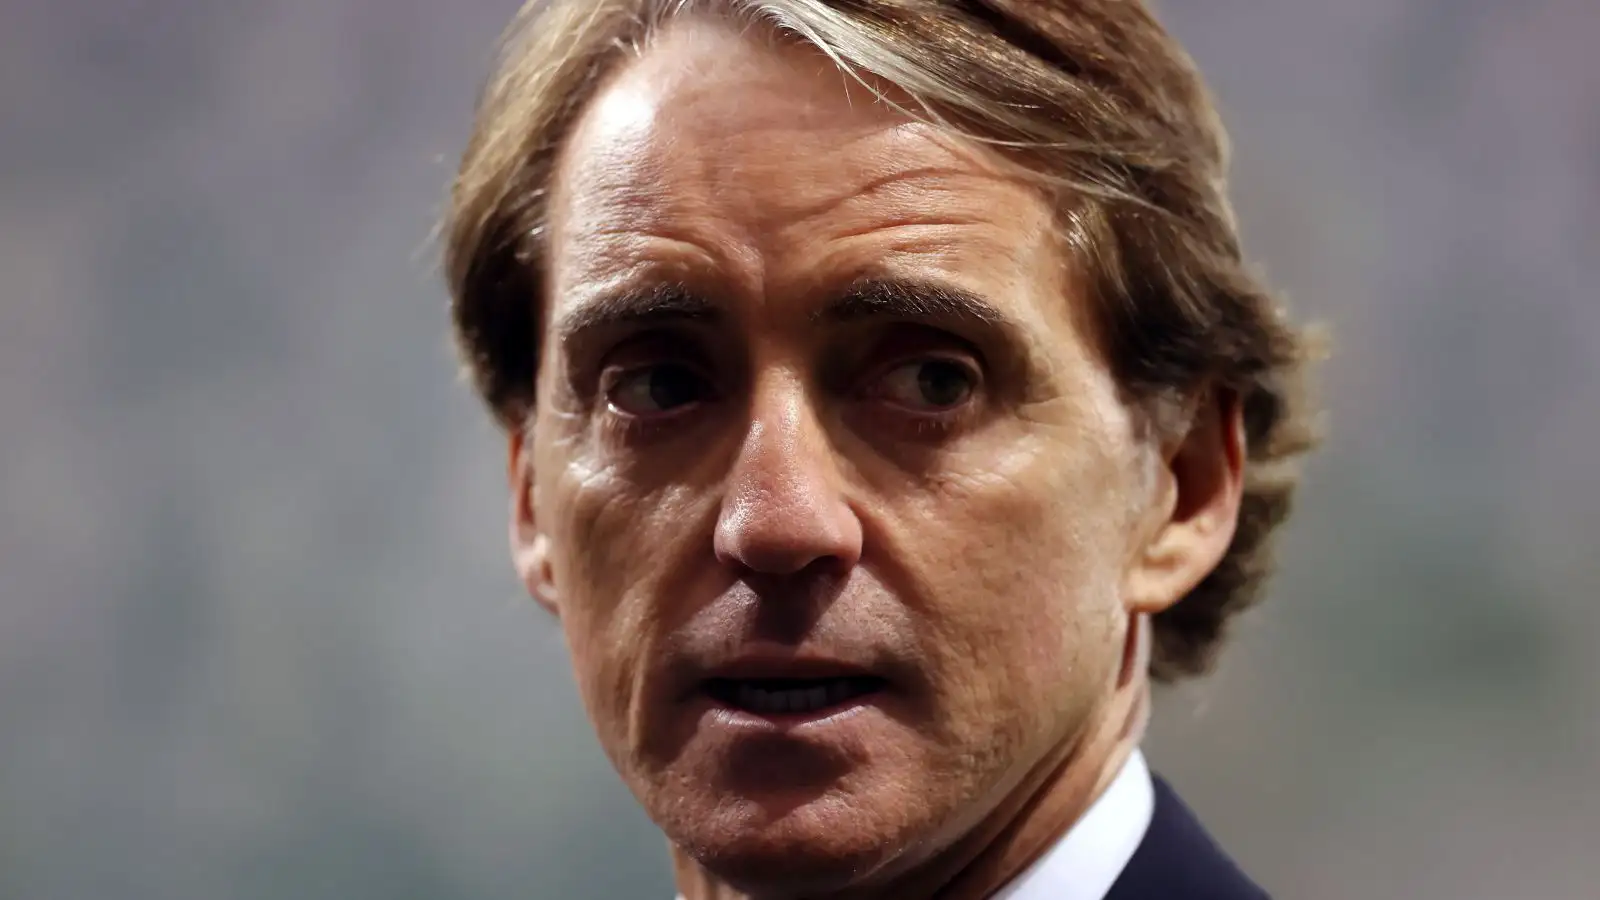 Man Utd-linked Roberto Mancini looks annoyed